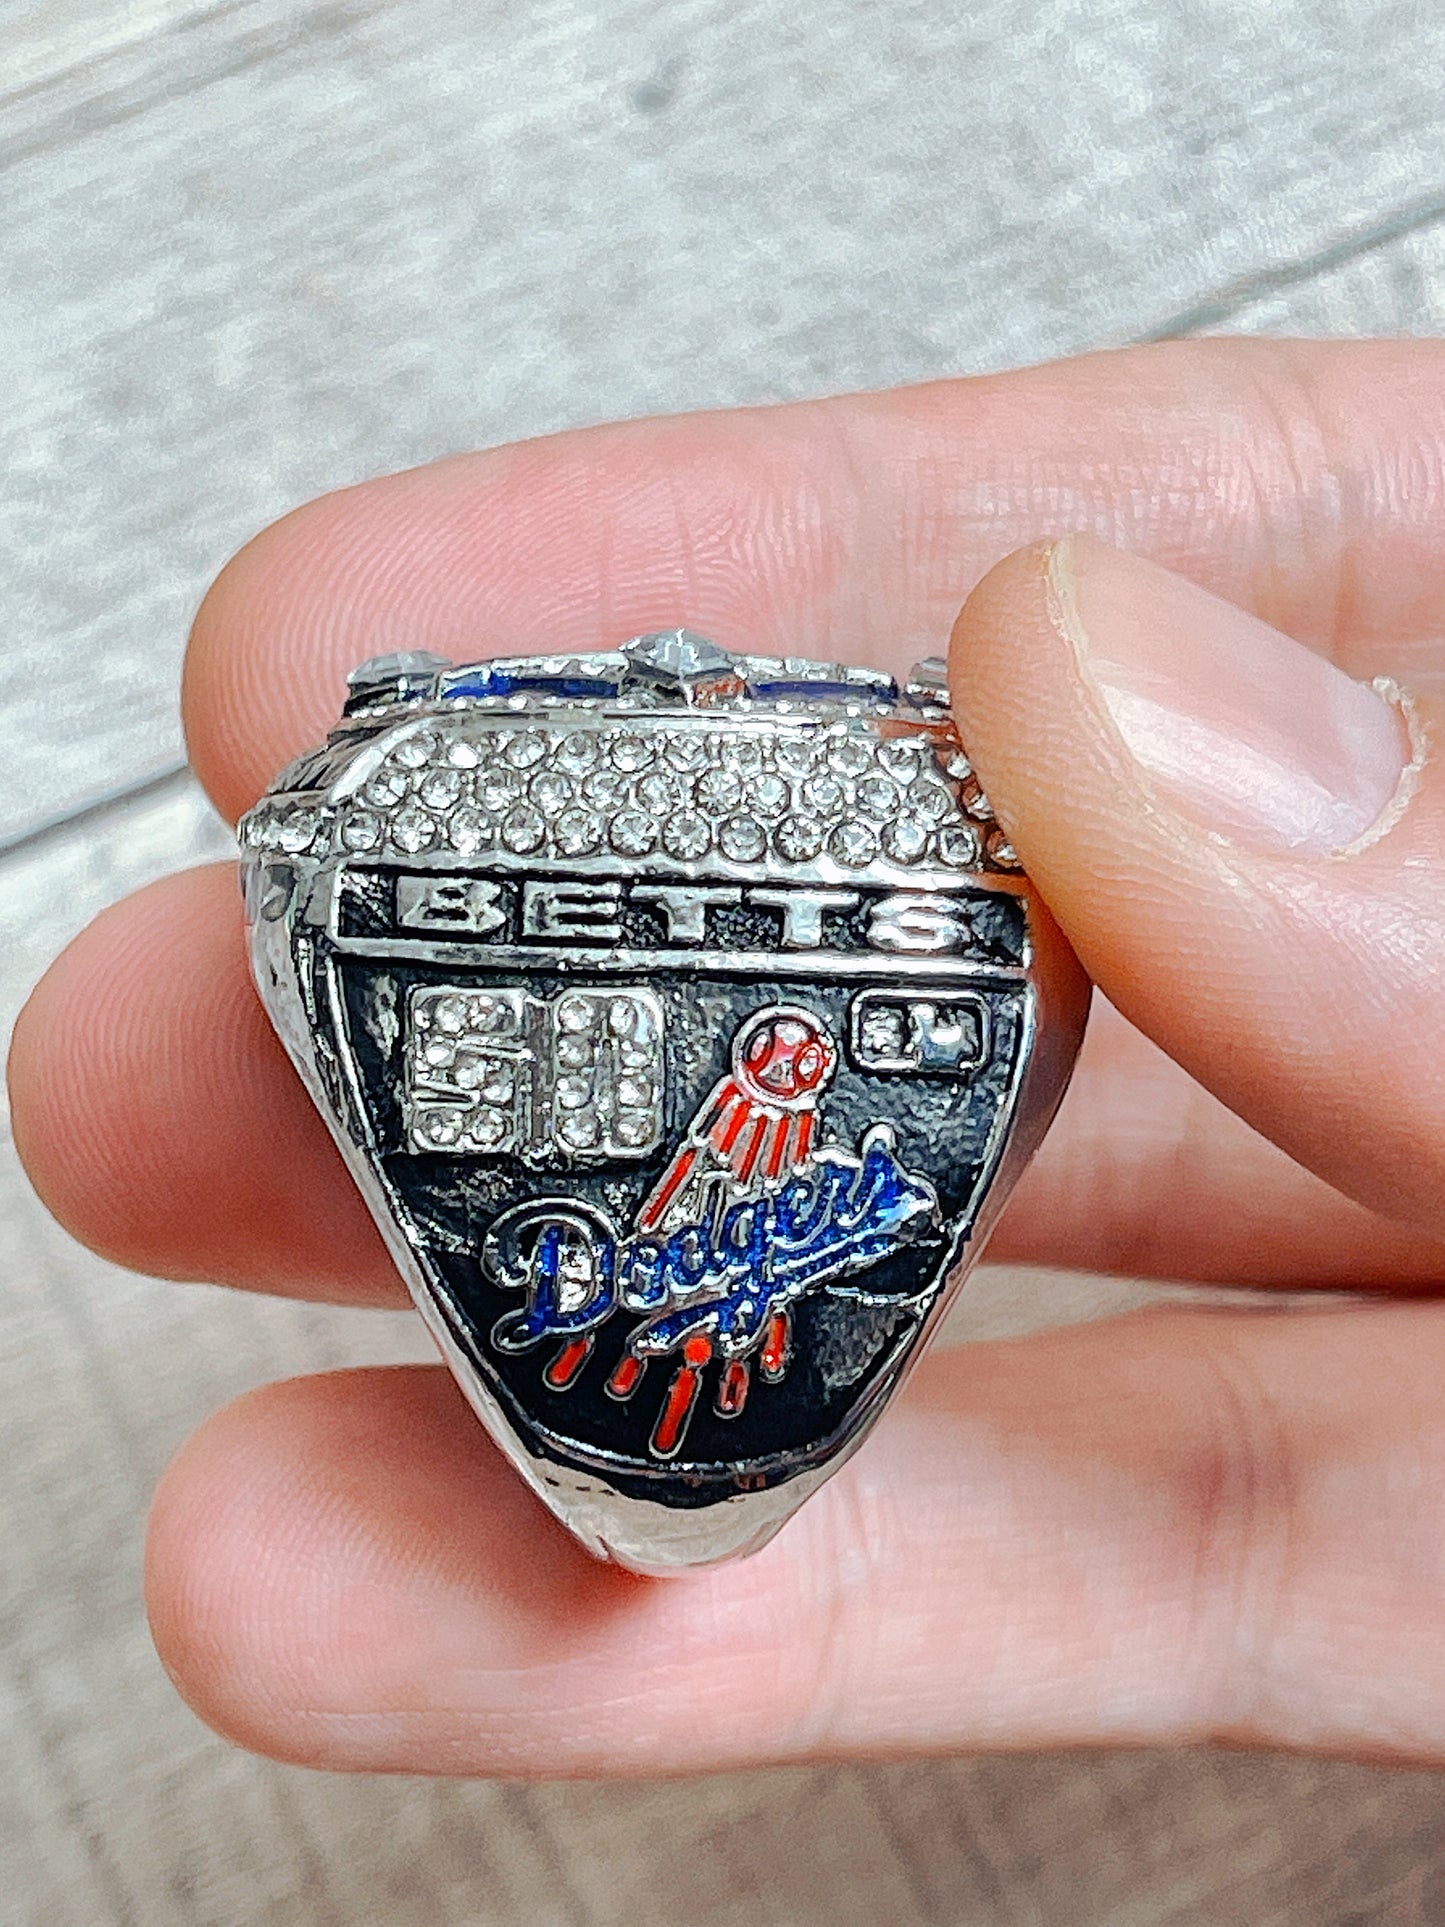 Champion ring|  2020 MLB LosAngelesDodgers Champion ring